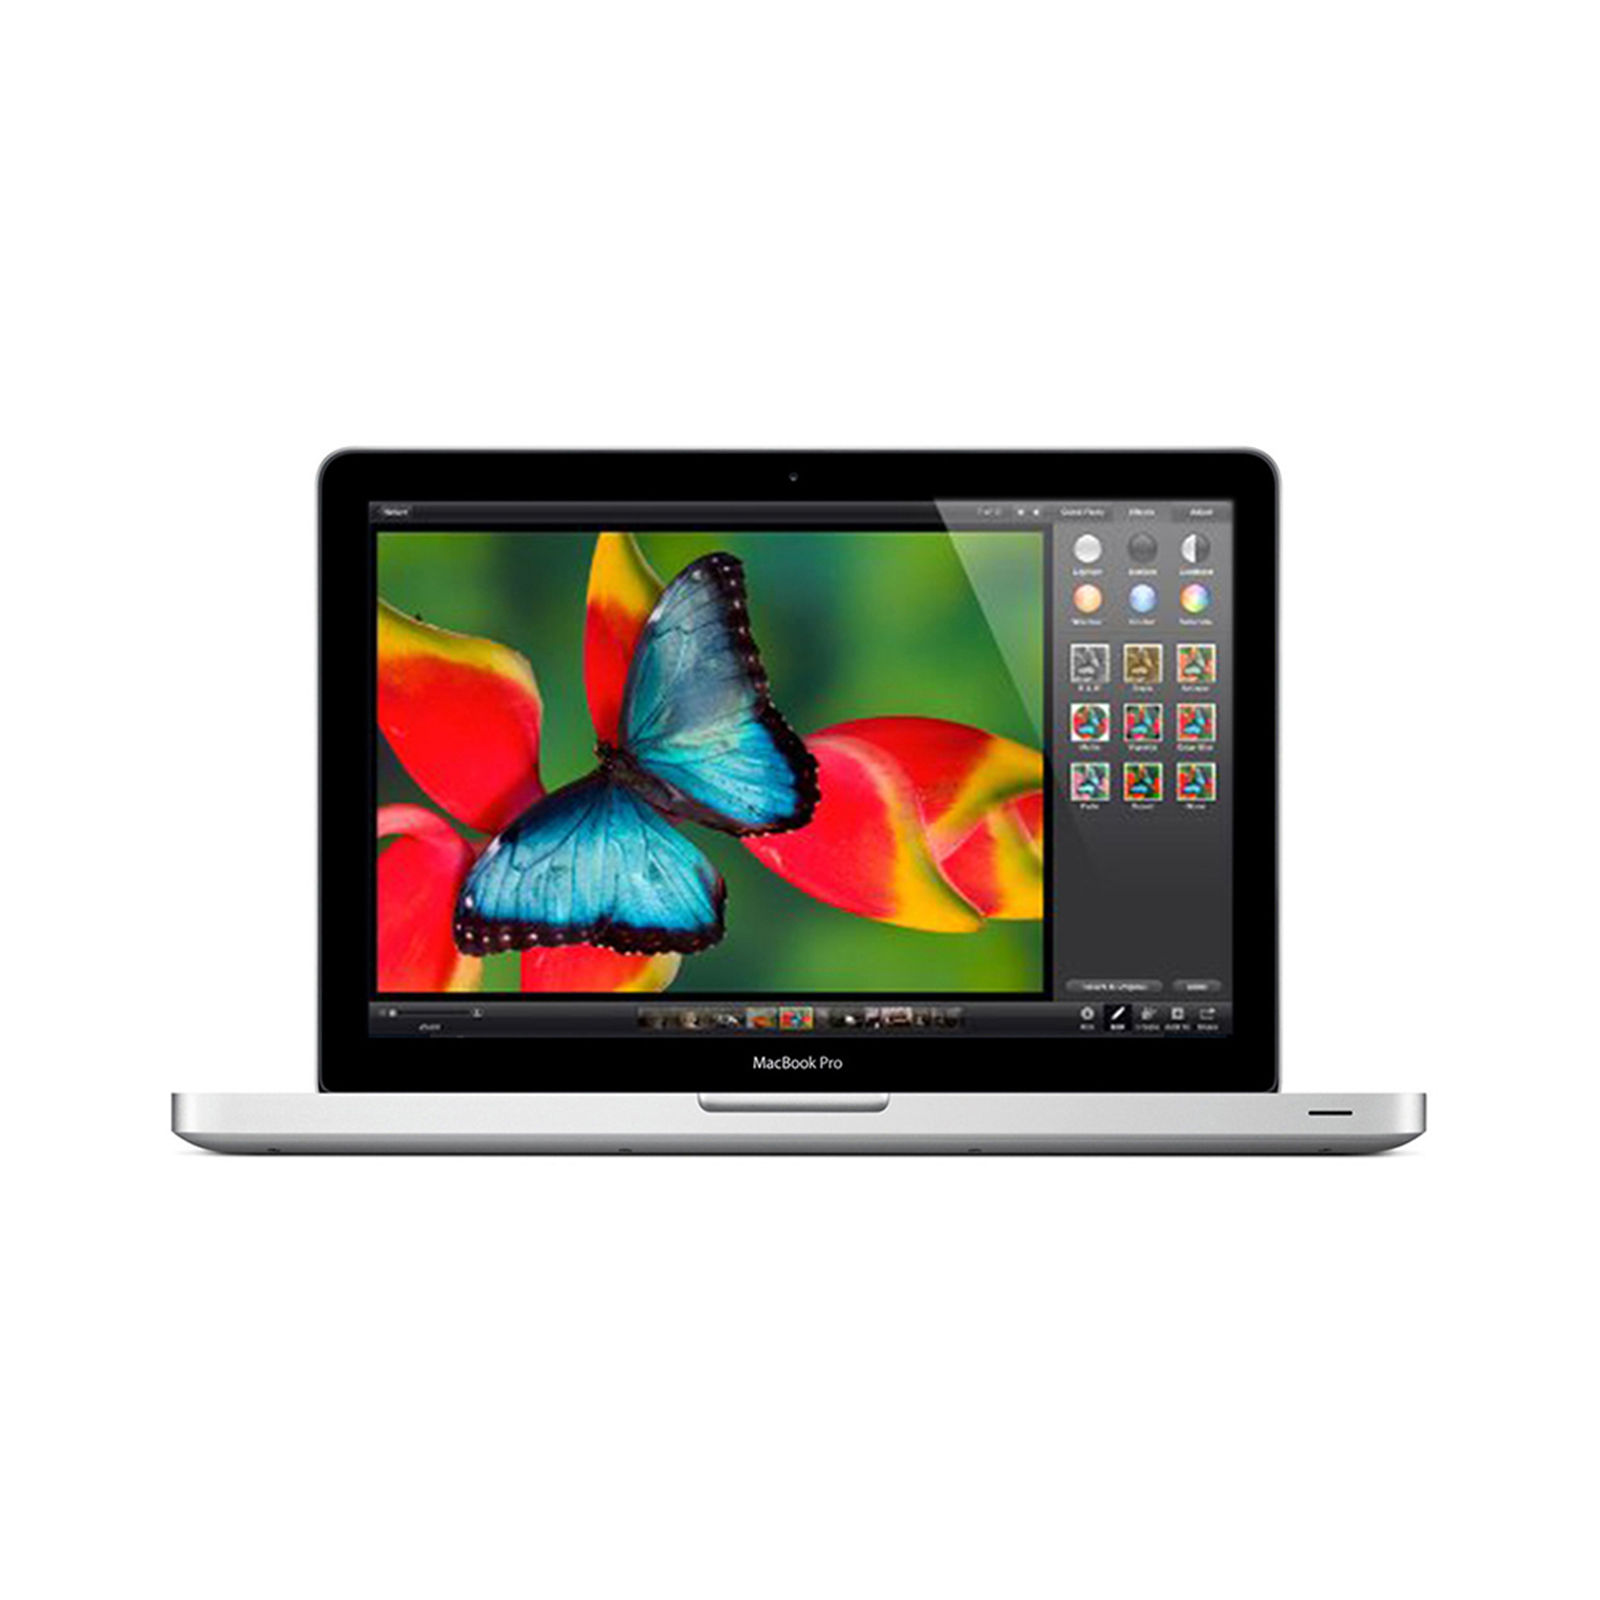 MacBook Pro (15-inch, Mid 2012) Intel Core i7 2.7 GHz 8GB 1 TB